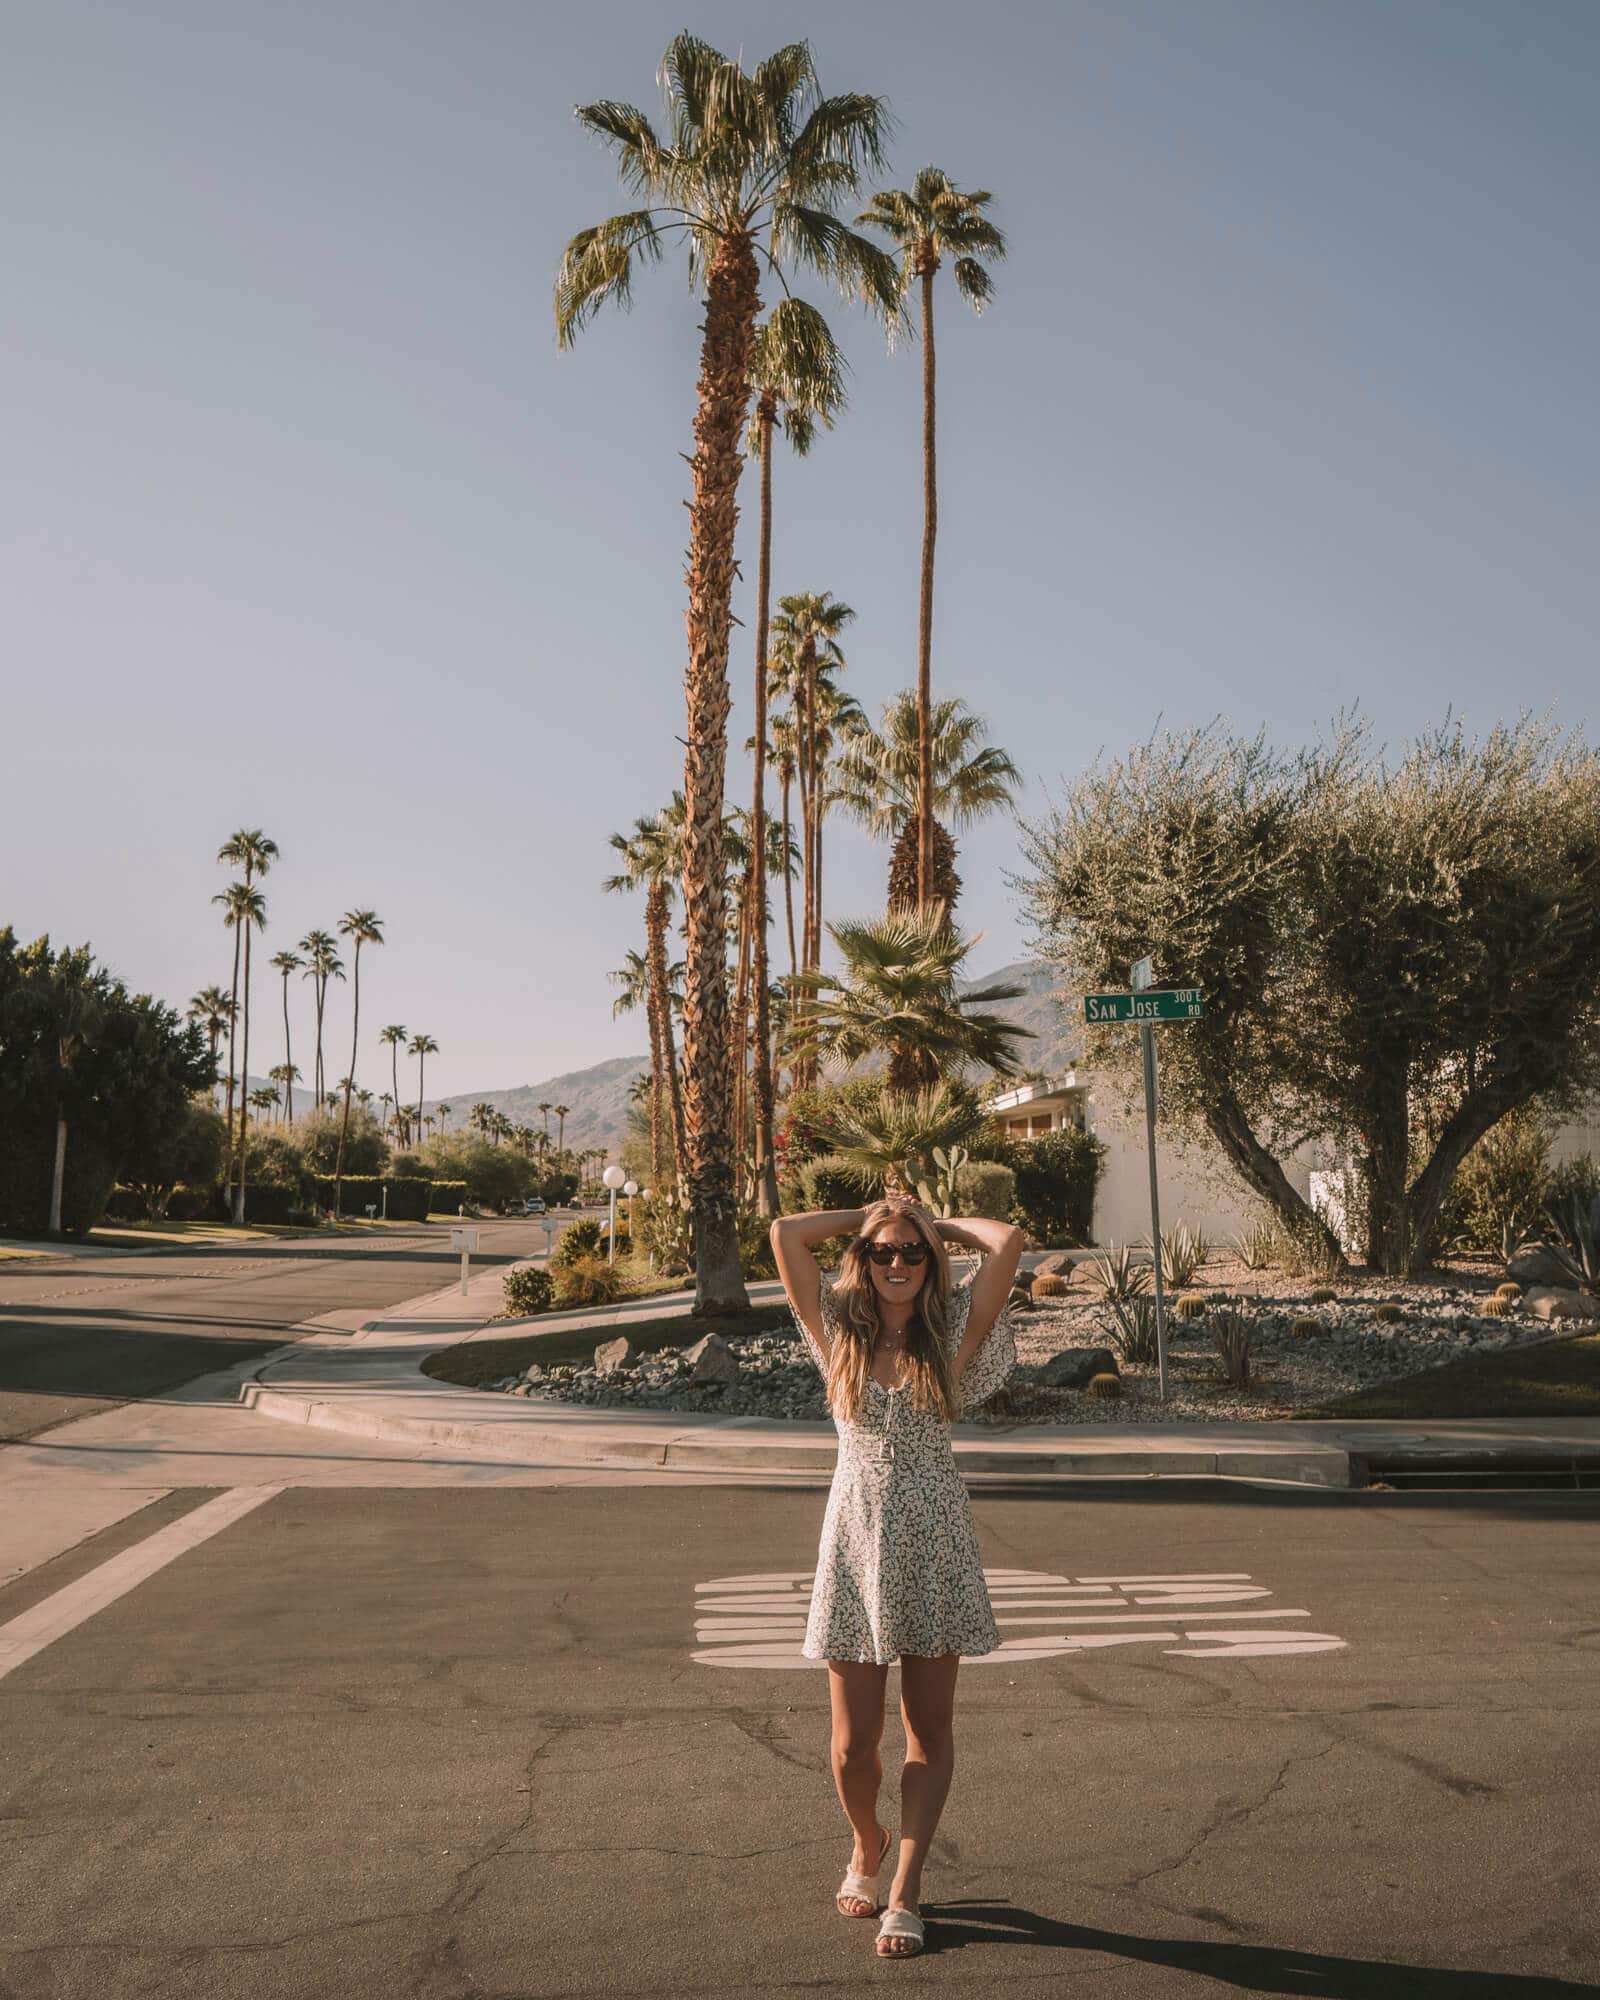 Michelle Halpern de Vive como si fuera el fin de semana en Palm Springs, California